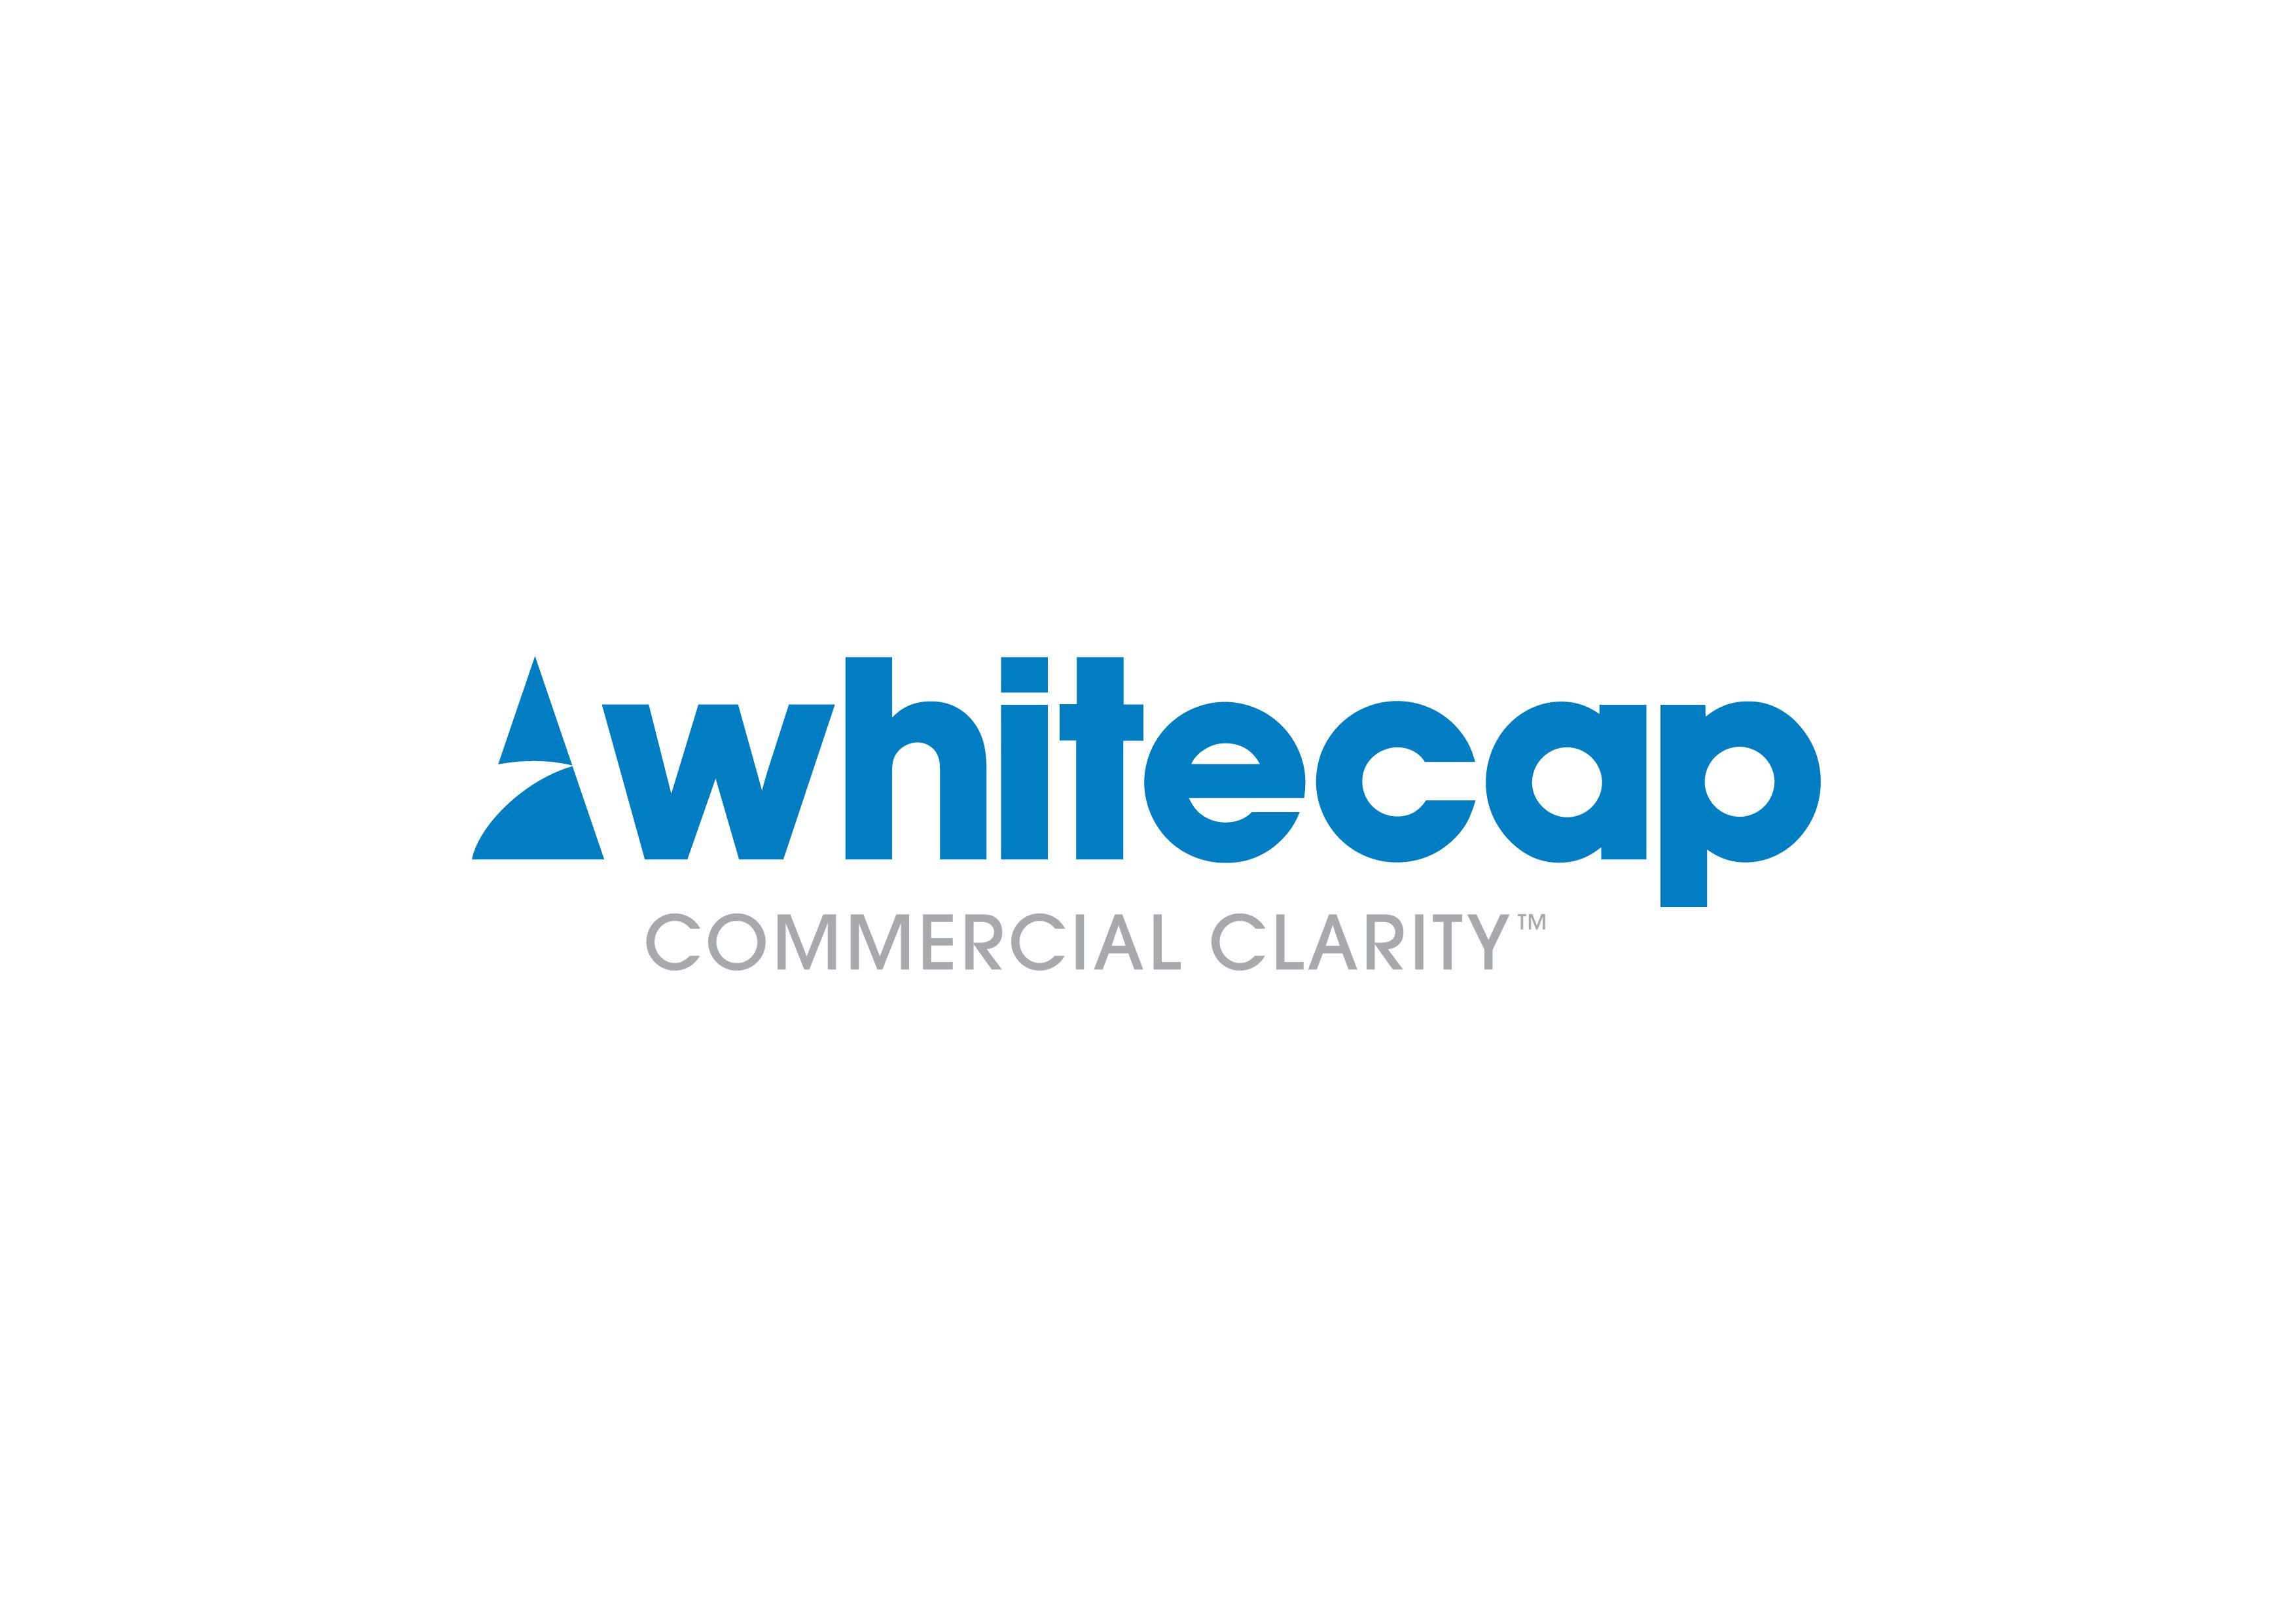 White Cap Logo - Whitecap to conduct research into Leeds City Region FinTech